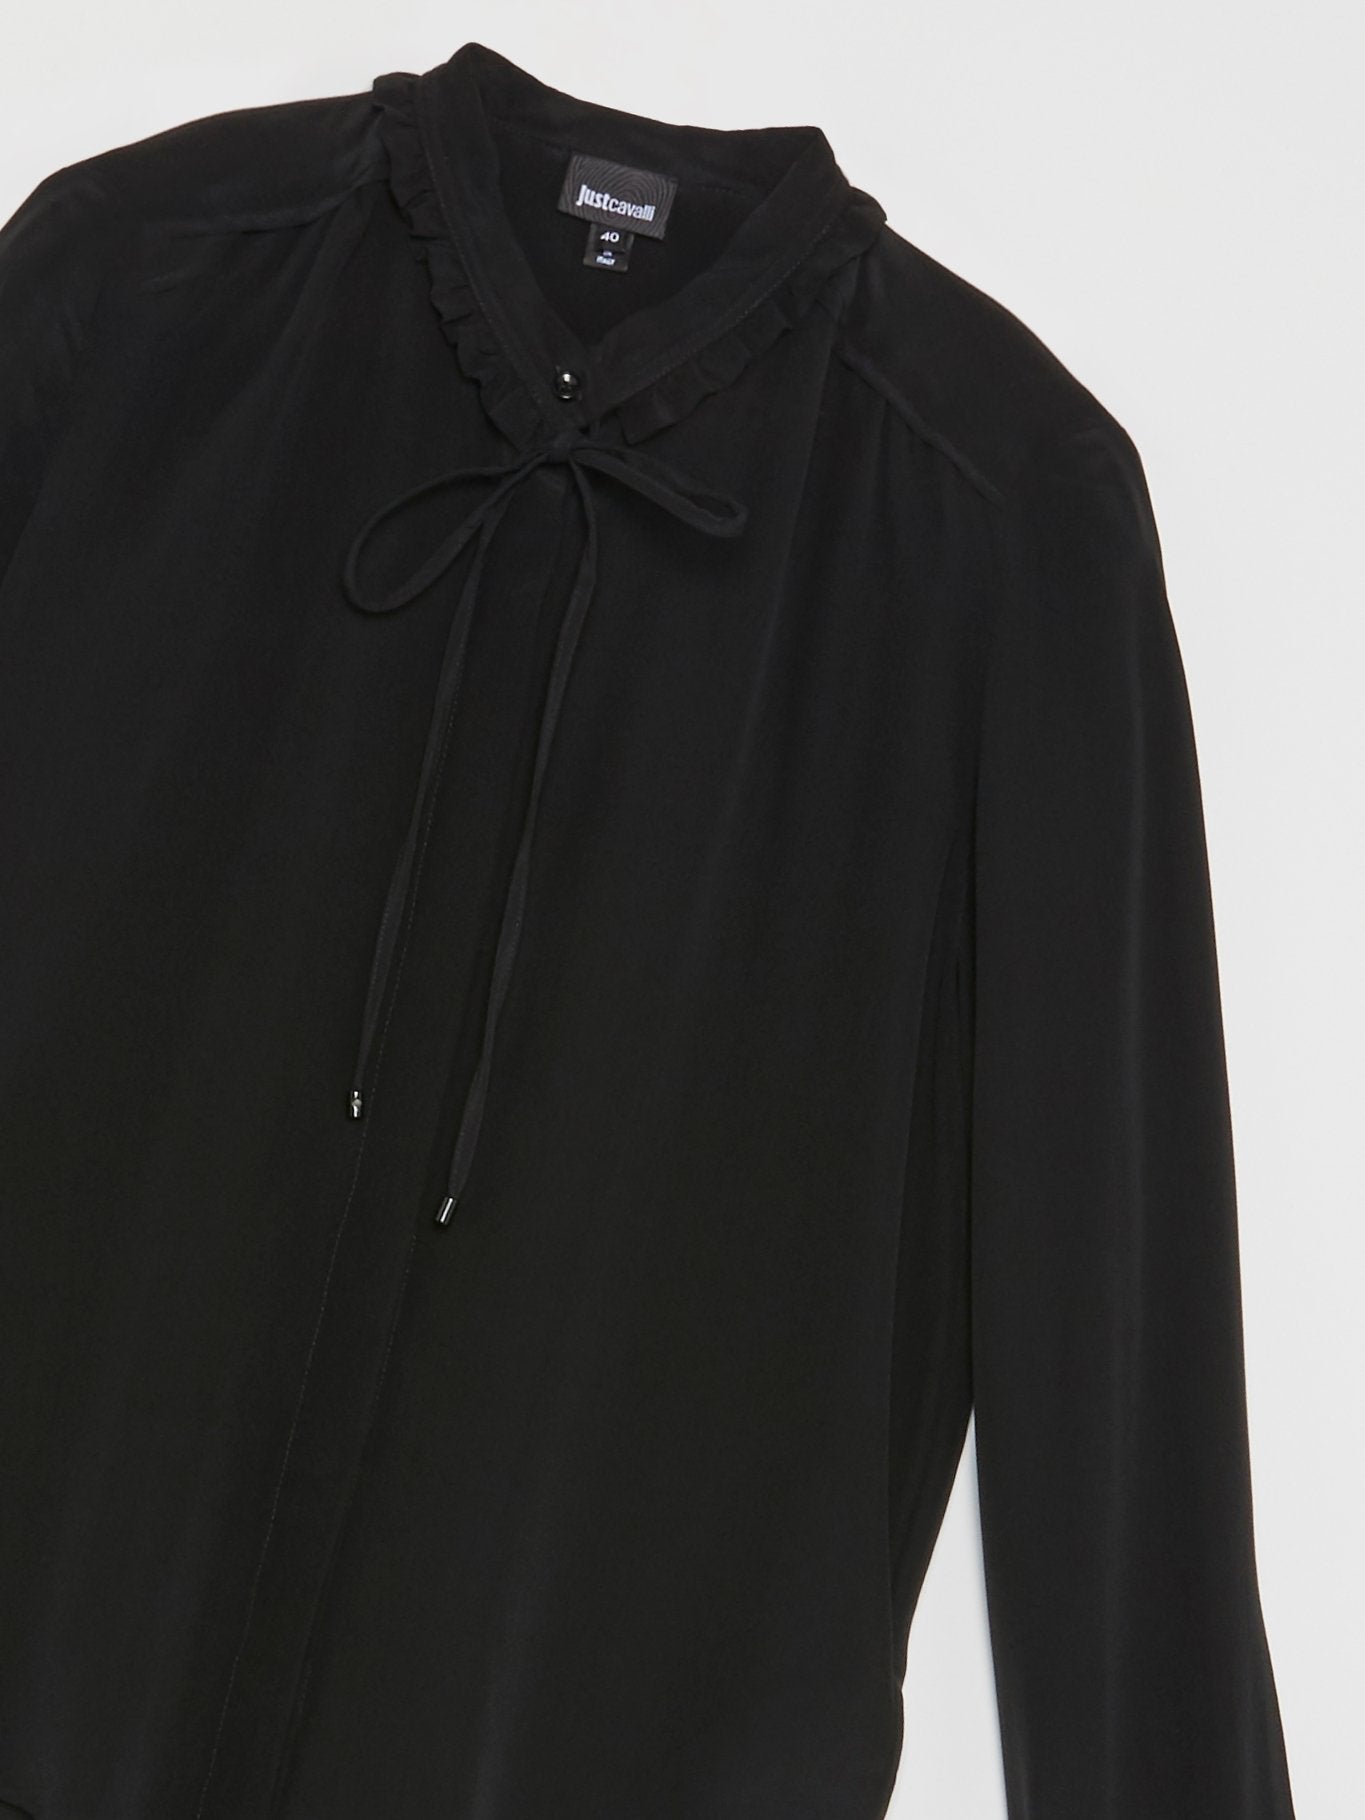 Черная блузка с рюшами на воротнике